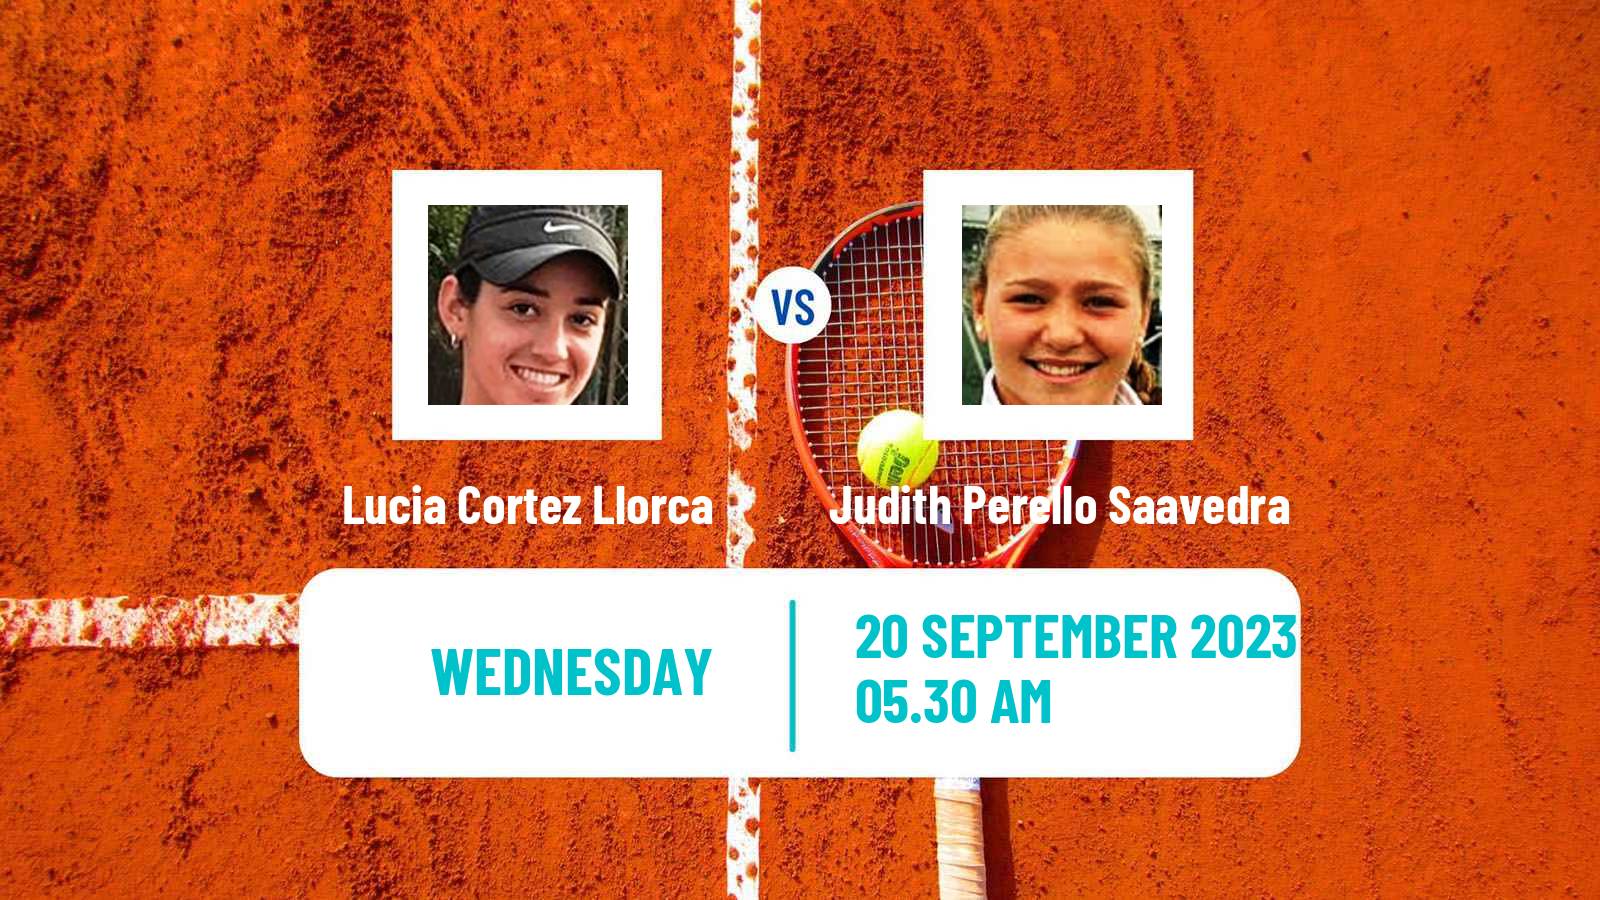 Tennis ITF W25 Ceuta Women Lucia Cortez Llorca - Judith Perello Saavedra